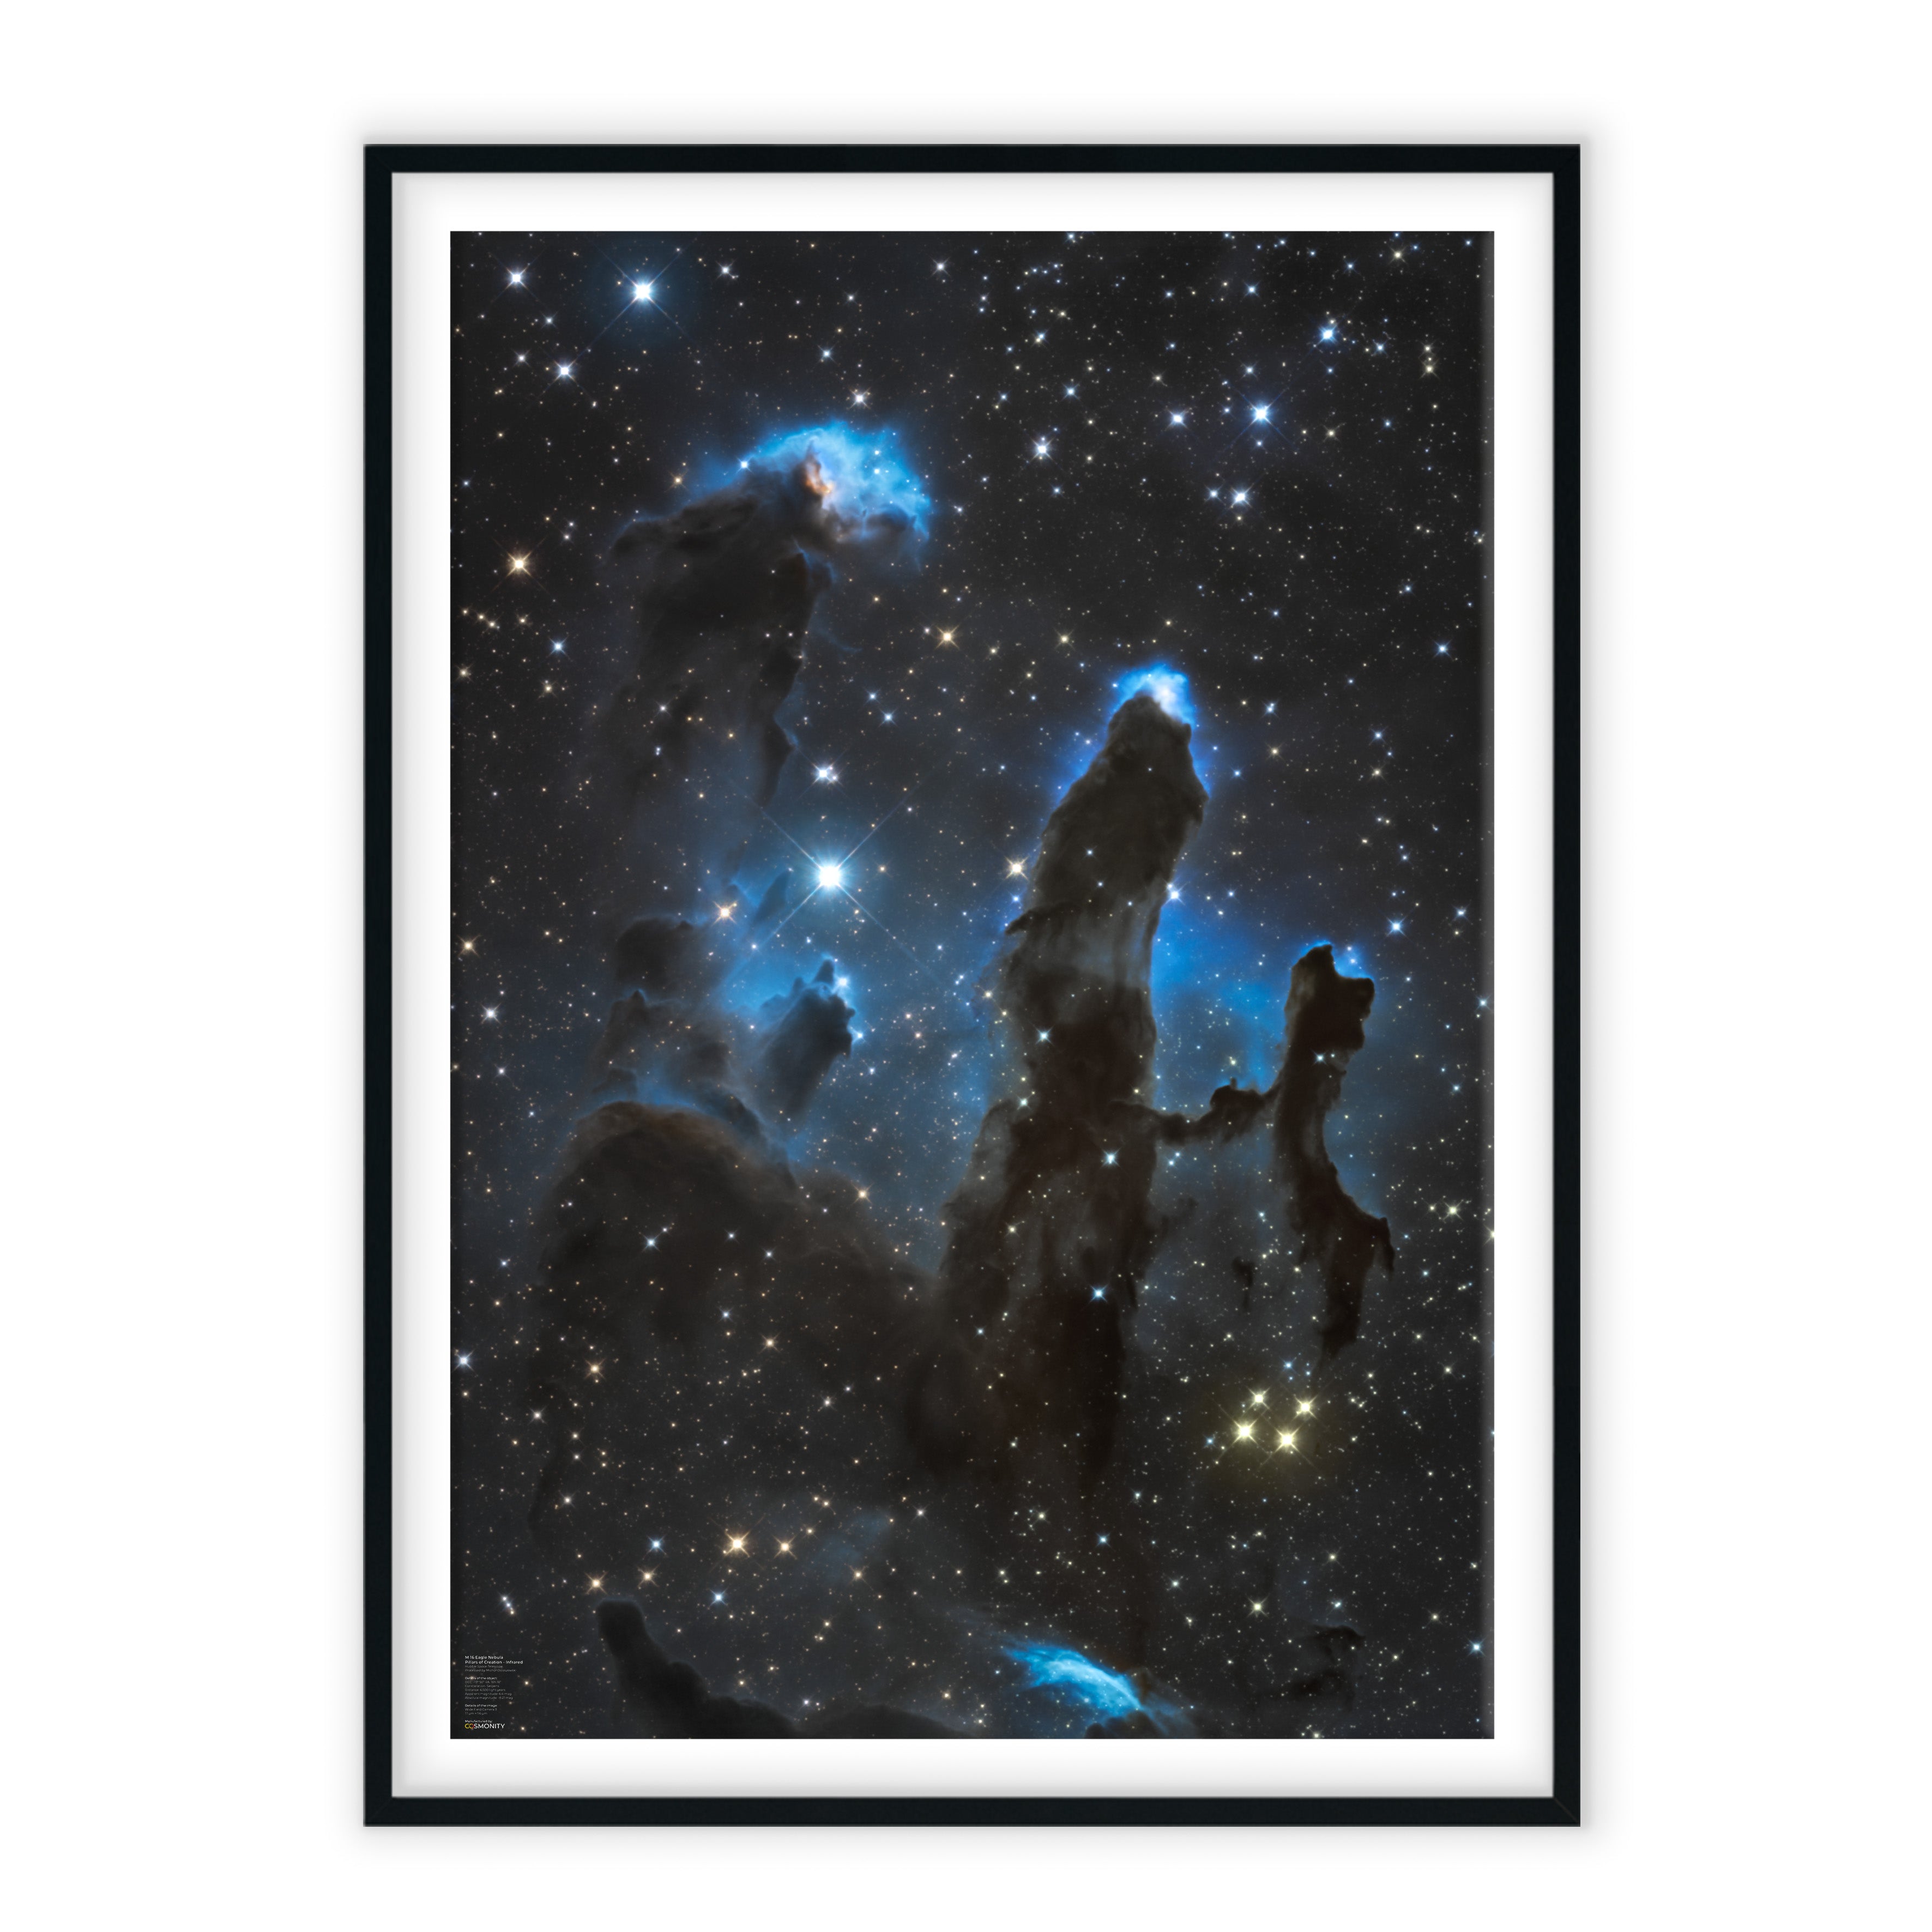 Eagle Nebula - Pillars of Creation - Infrared